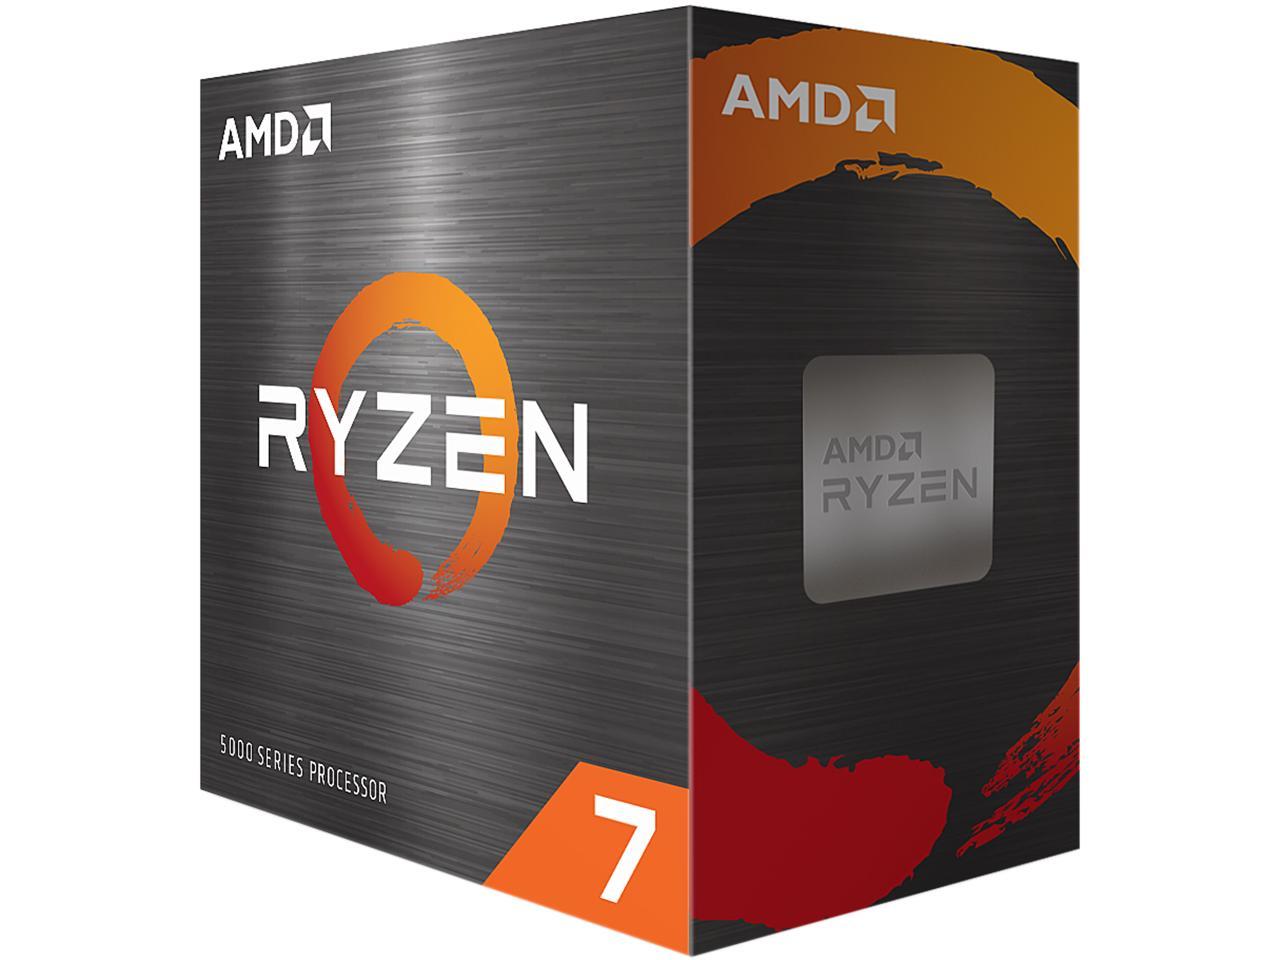 AMD Ryzen 7 5800X Desktop Processor $343.99